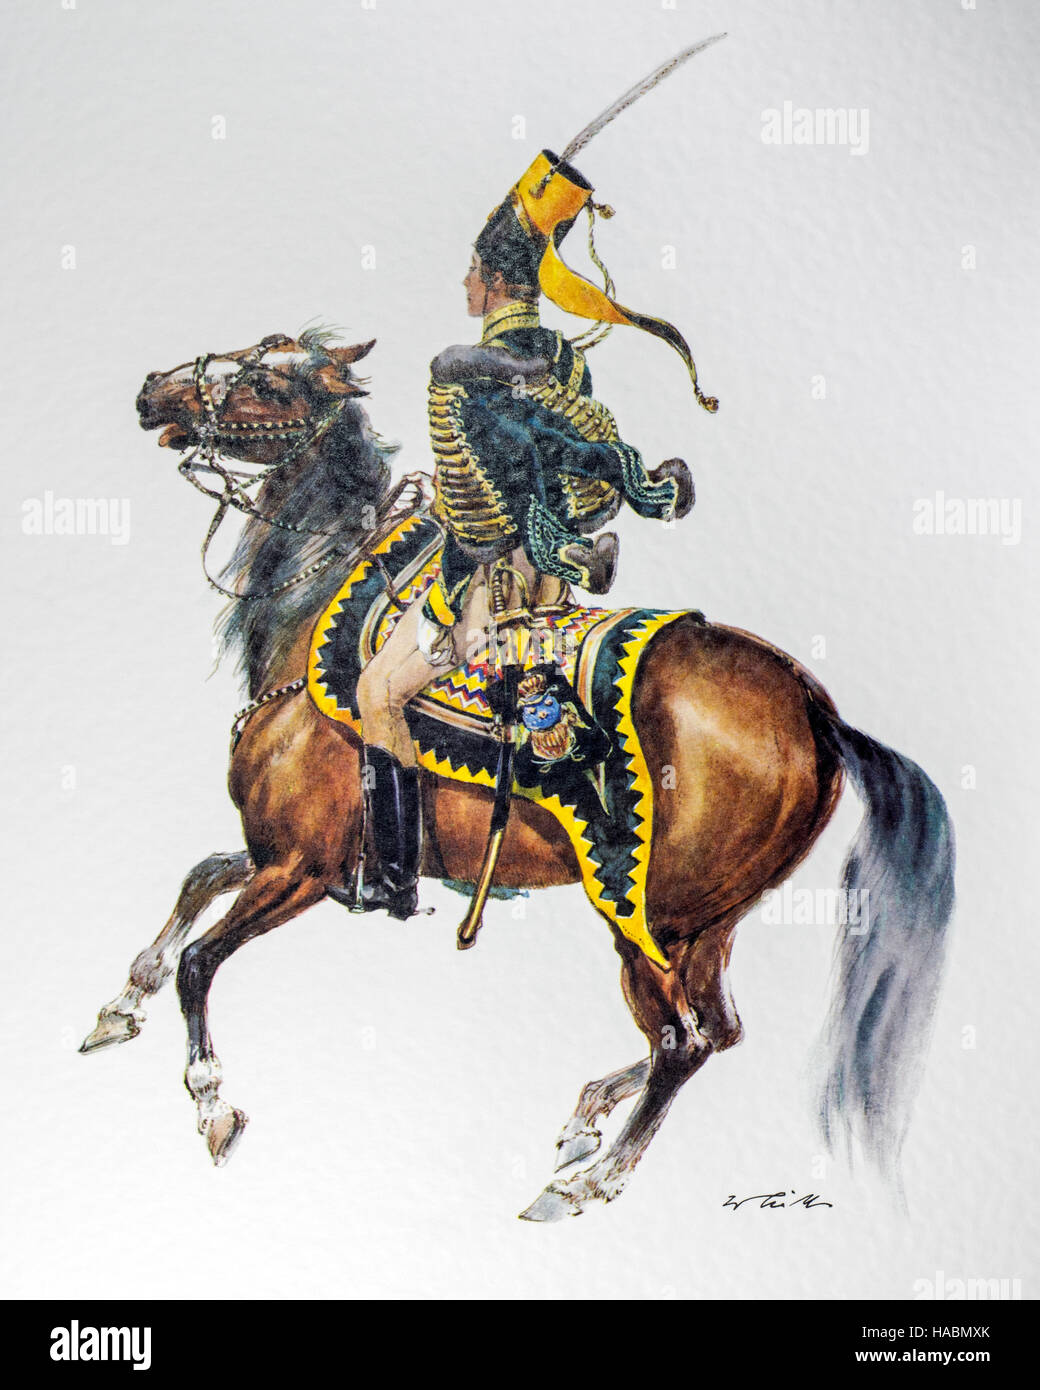 Swedish officer on horseback in uniform of the 1837 Hussar regiment 'Kronprinz' Stock Photo